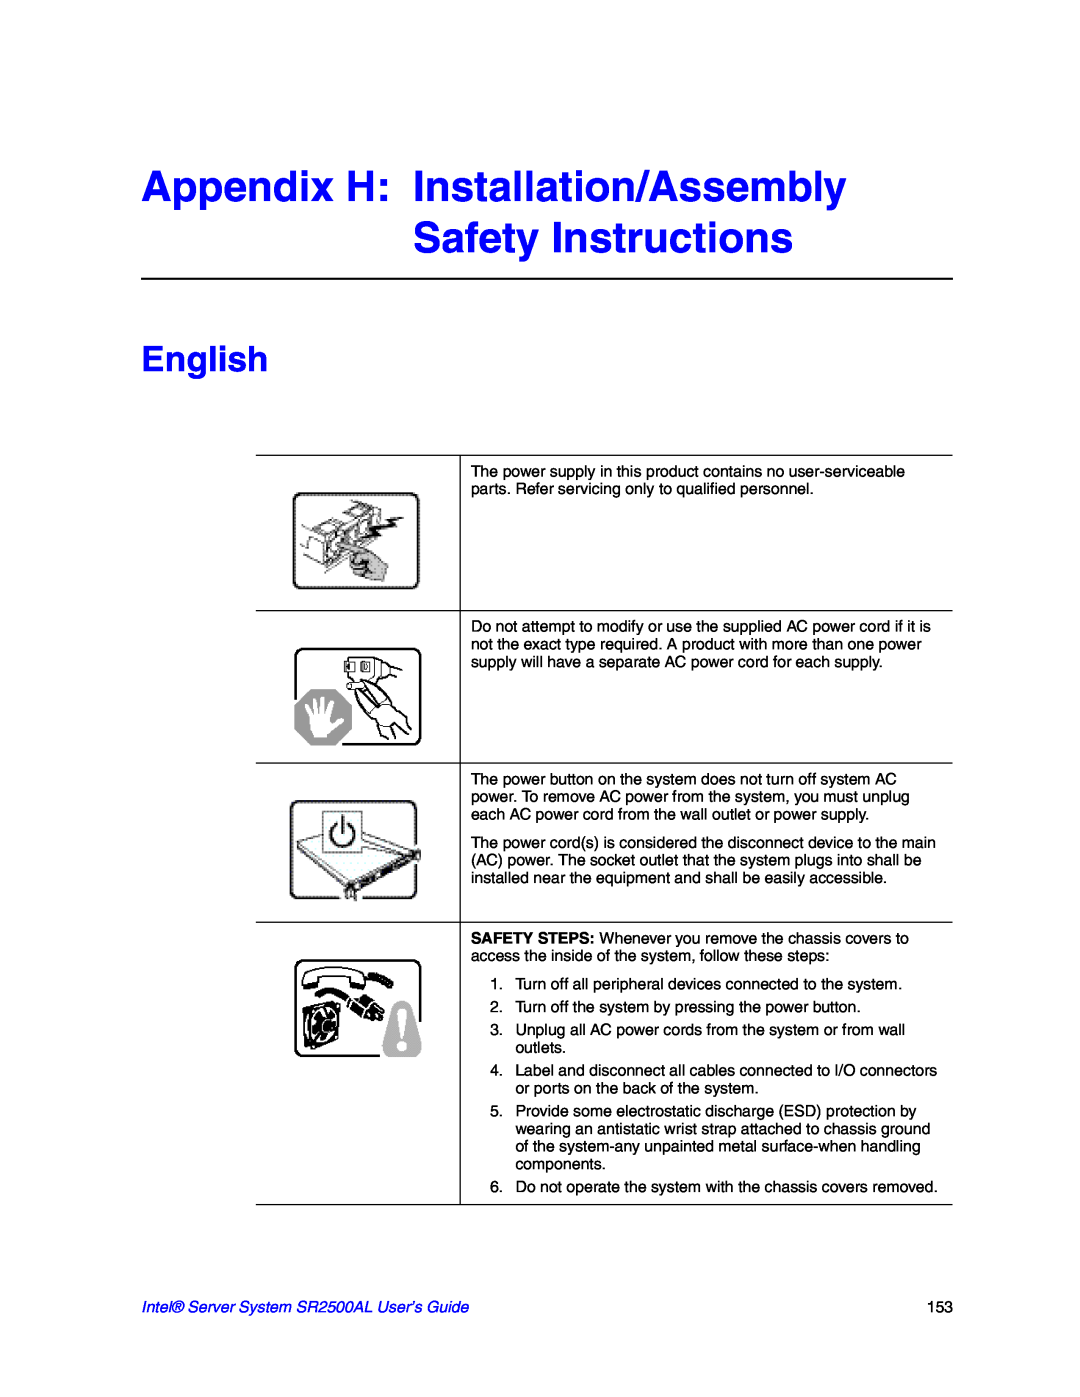 Intel manual Appendix H Installation/Assembly Safety Instructions, English, Intel Server System SR2500AL User’s Guide 